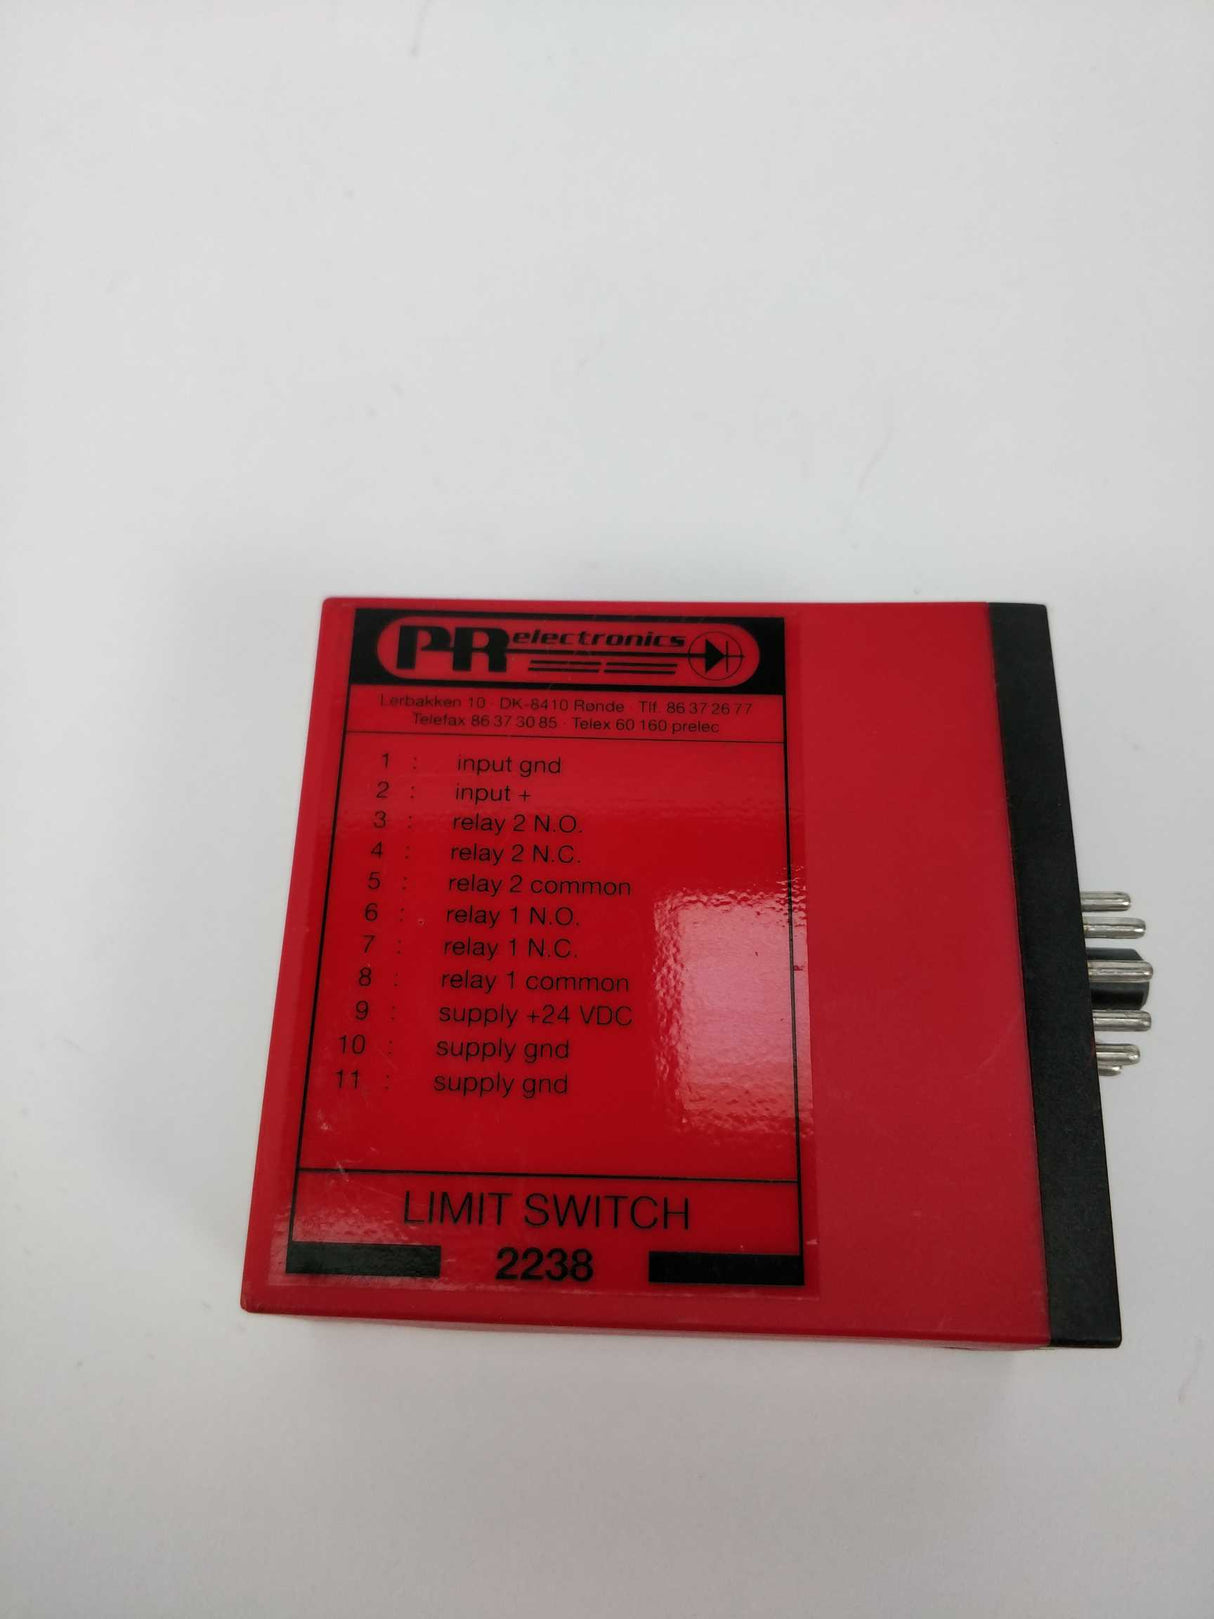 PR Electronics 2238 X2C Serial No. 950478043 Limit Switch